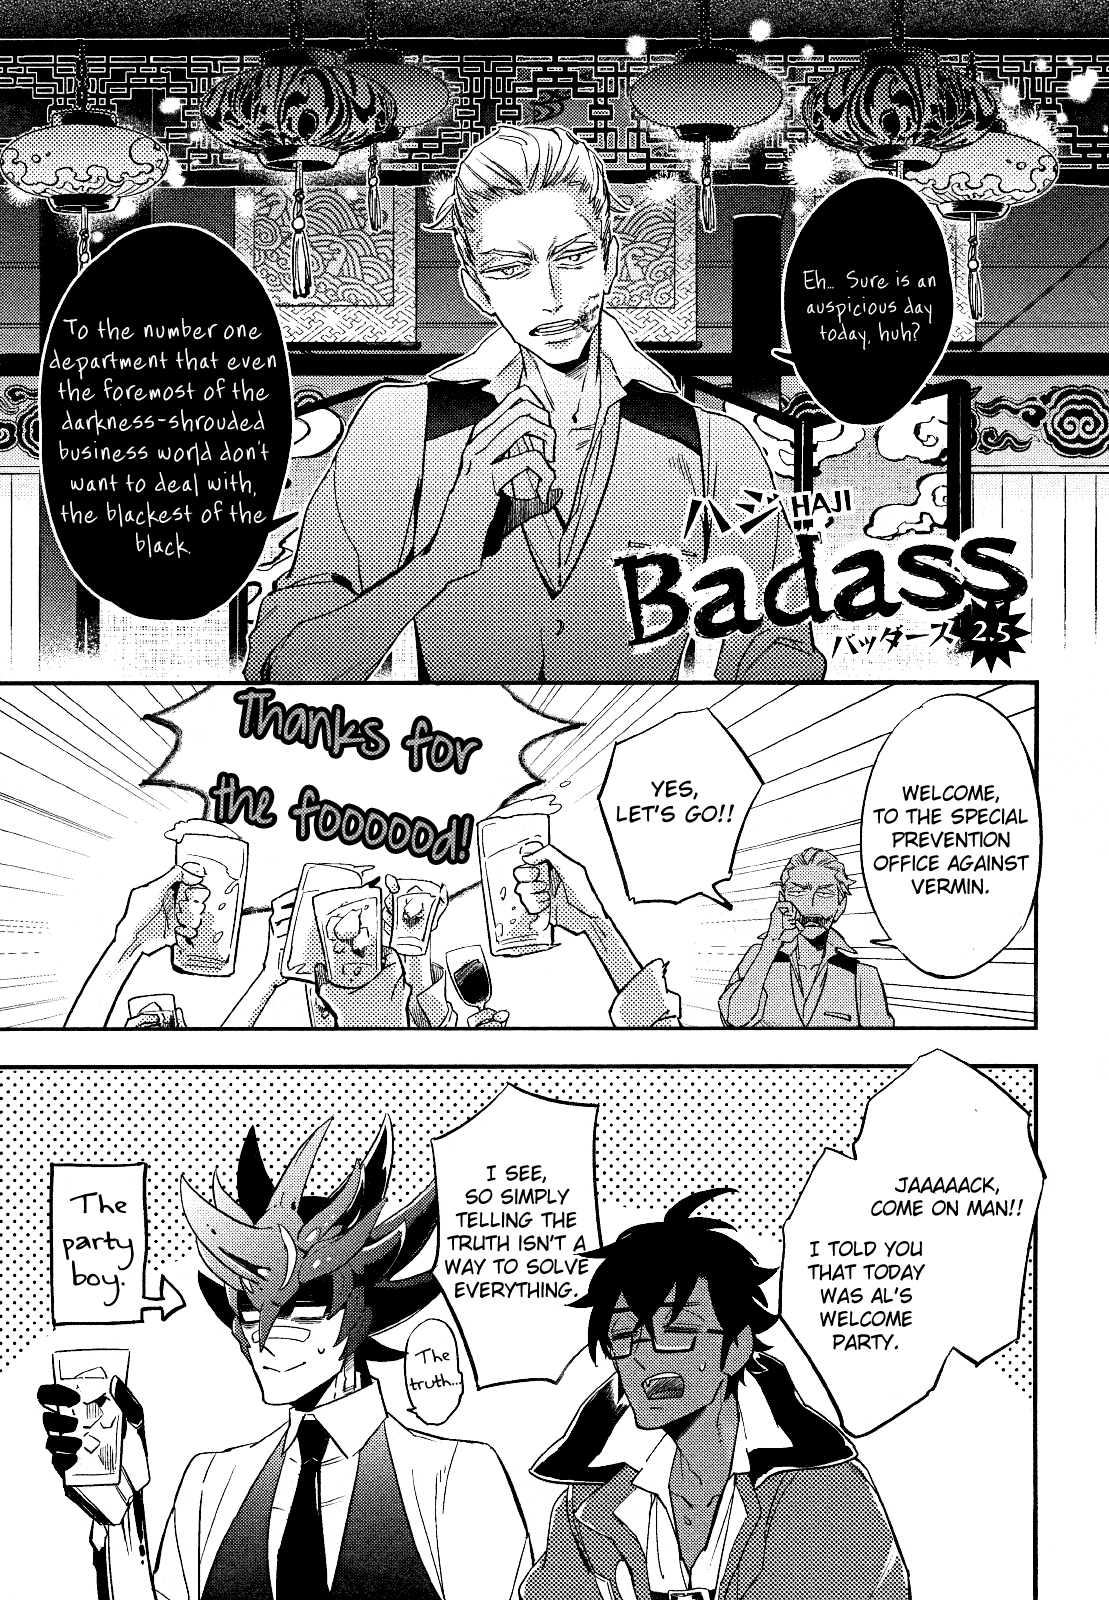 Badass - Page 1